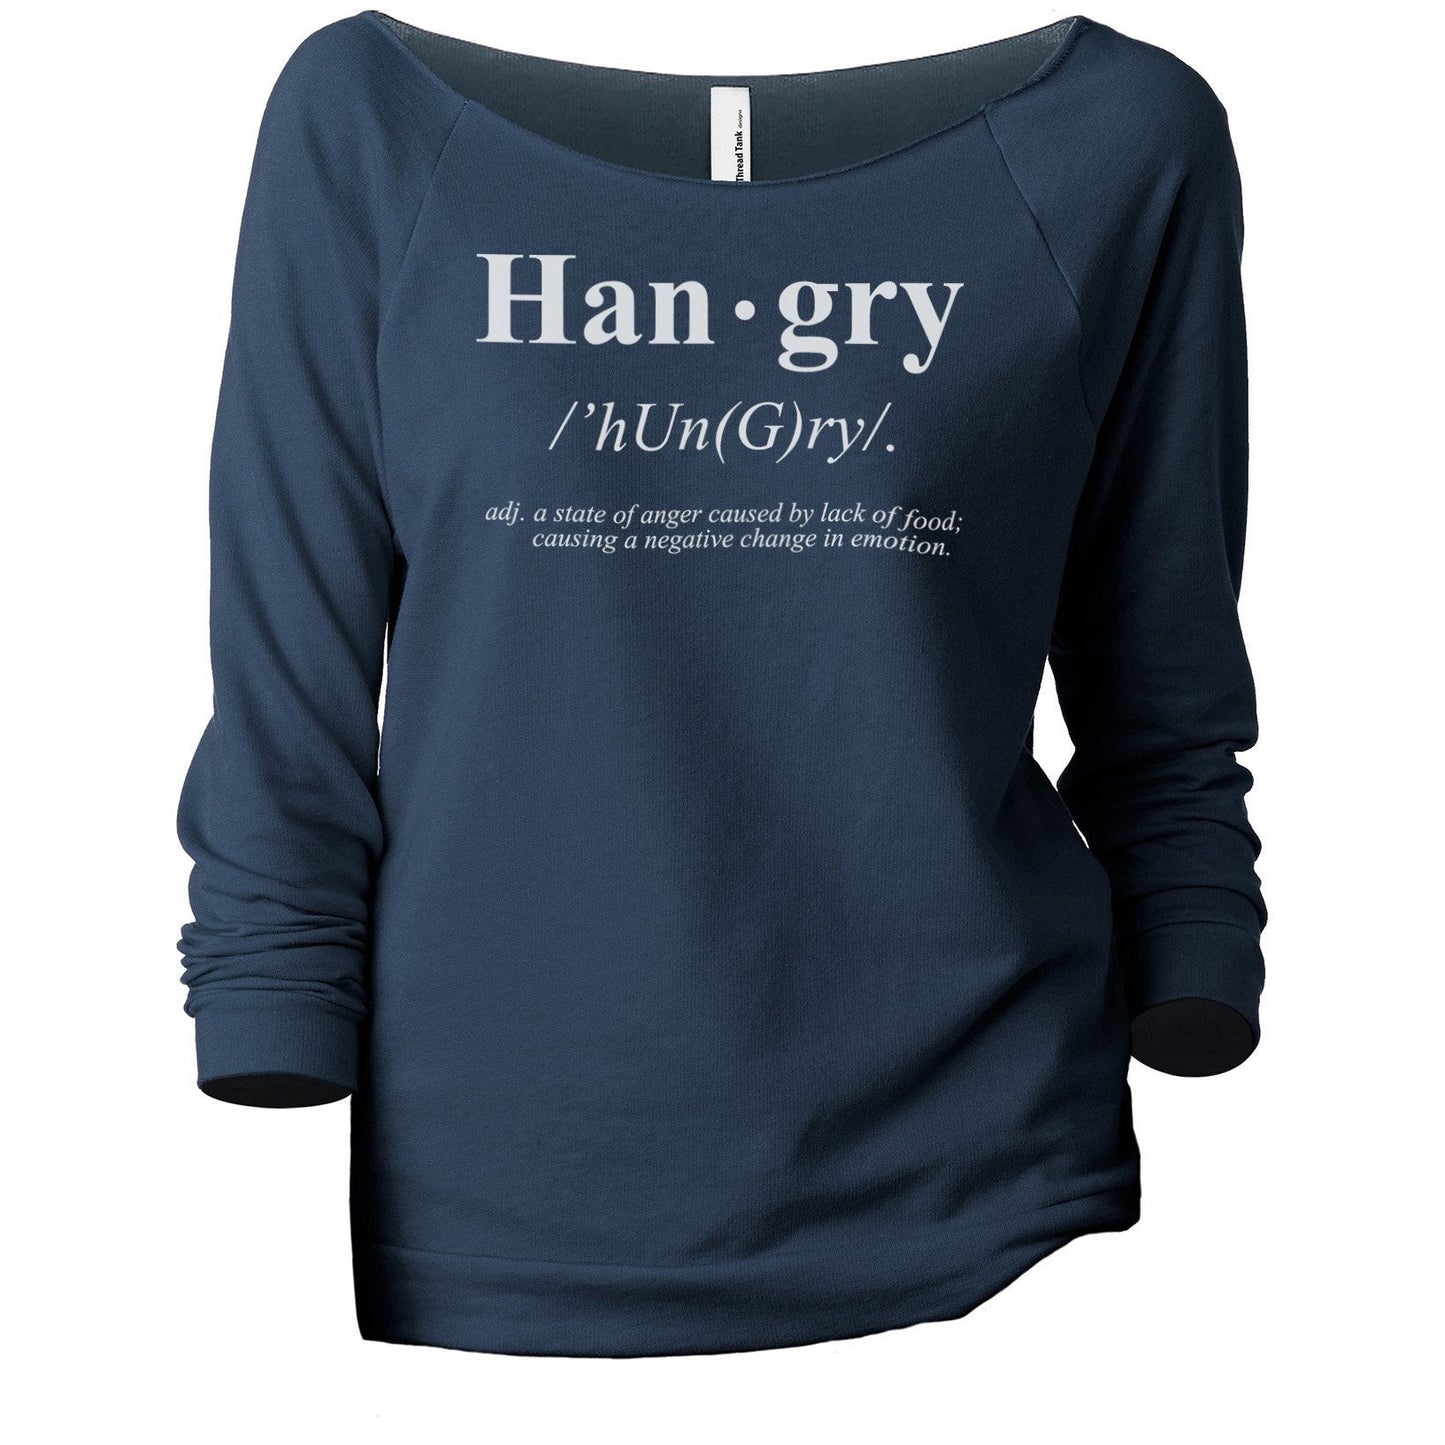 HanGry Women's Graphic Printed Lightweight Slouchy 3/4 Sleeves Sweatshirt Navy